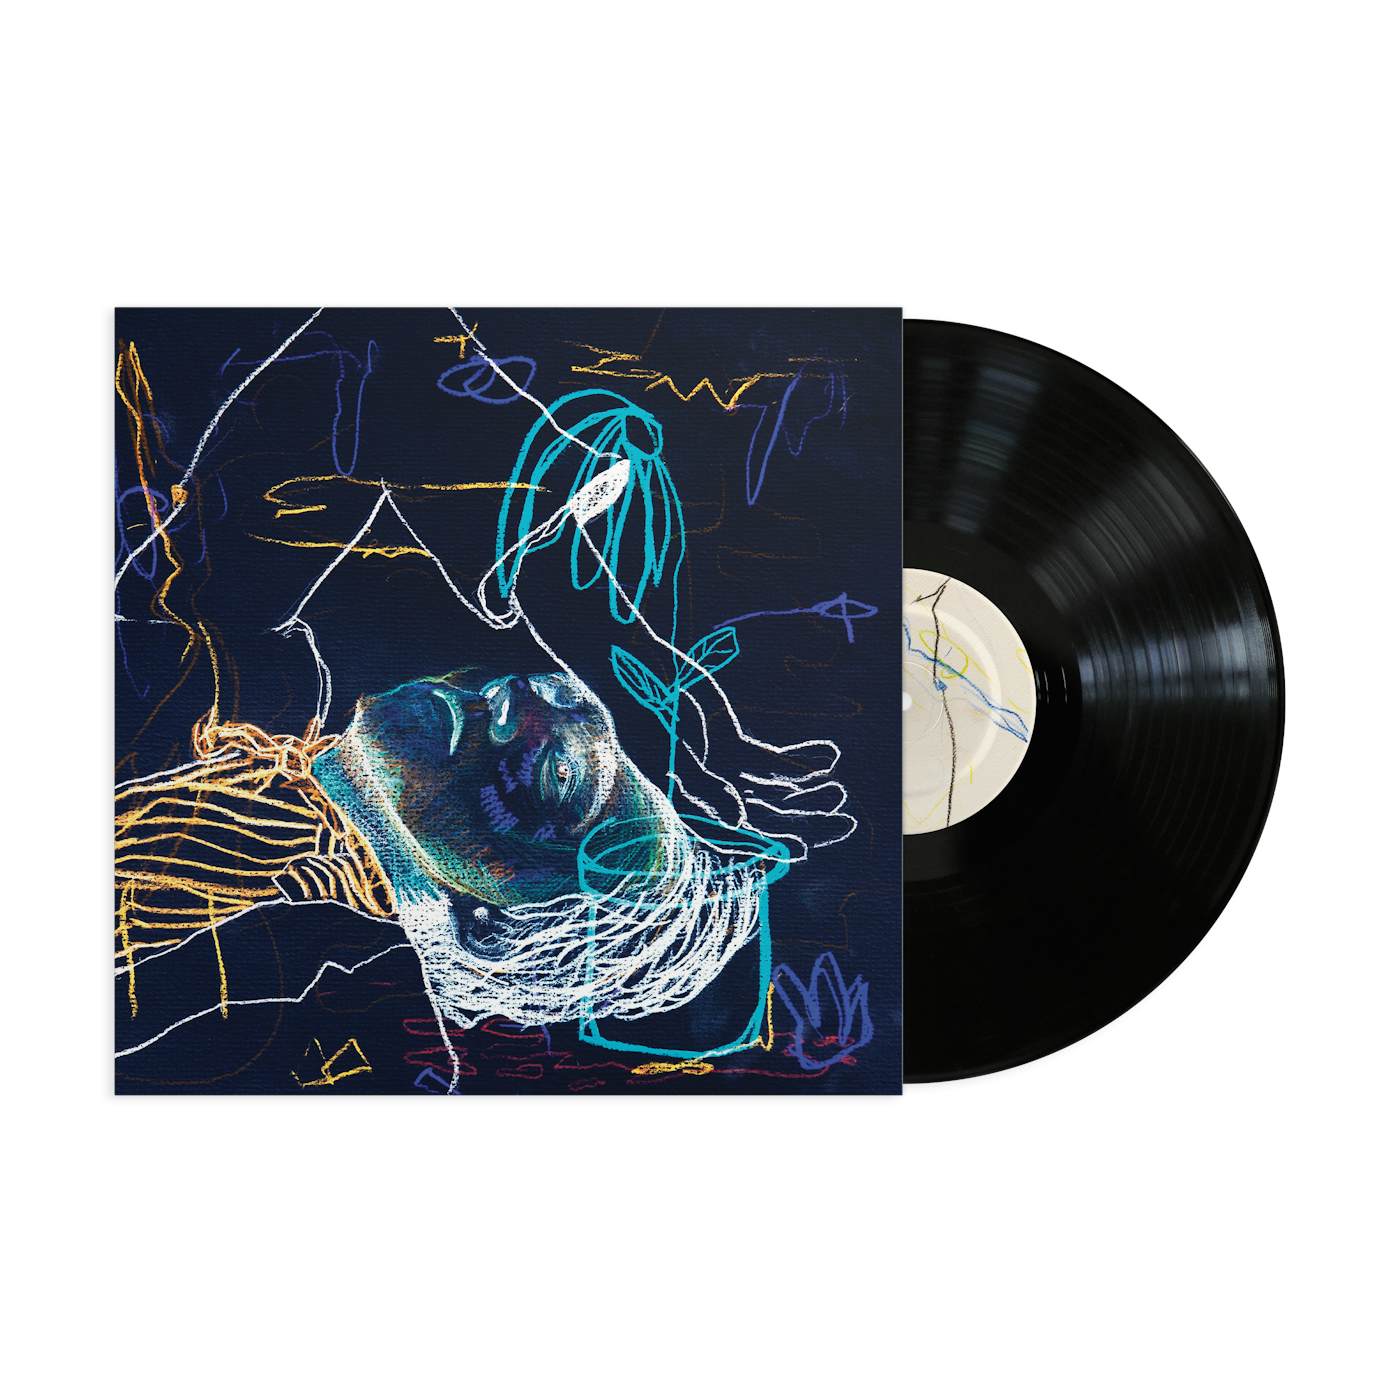 Sondre Lerche | Avatars Of The Night Double LP (Limited to 250) (Vinyl)